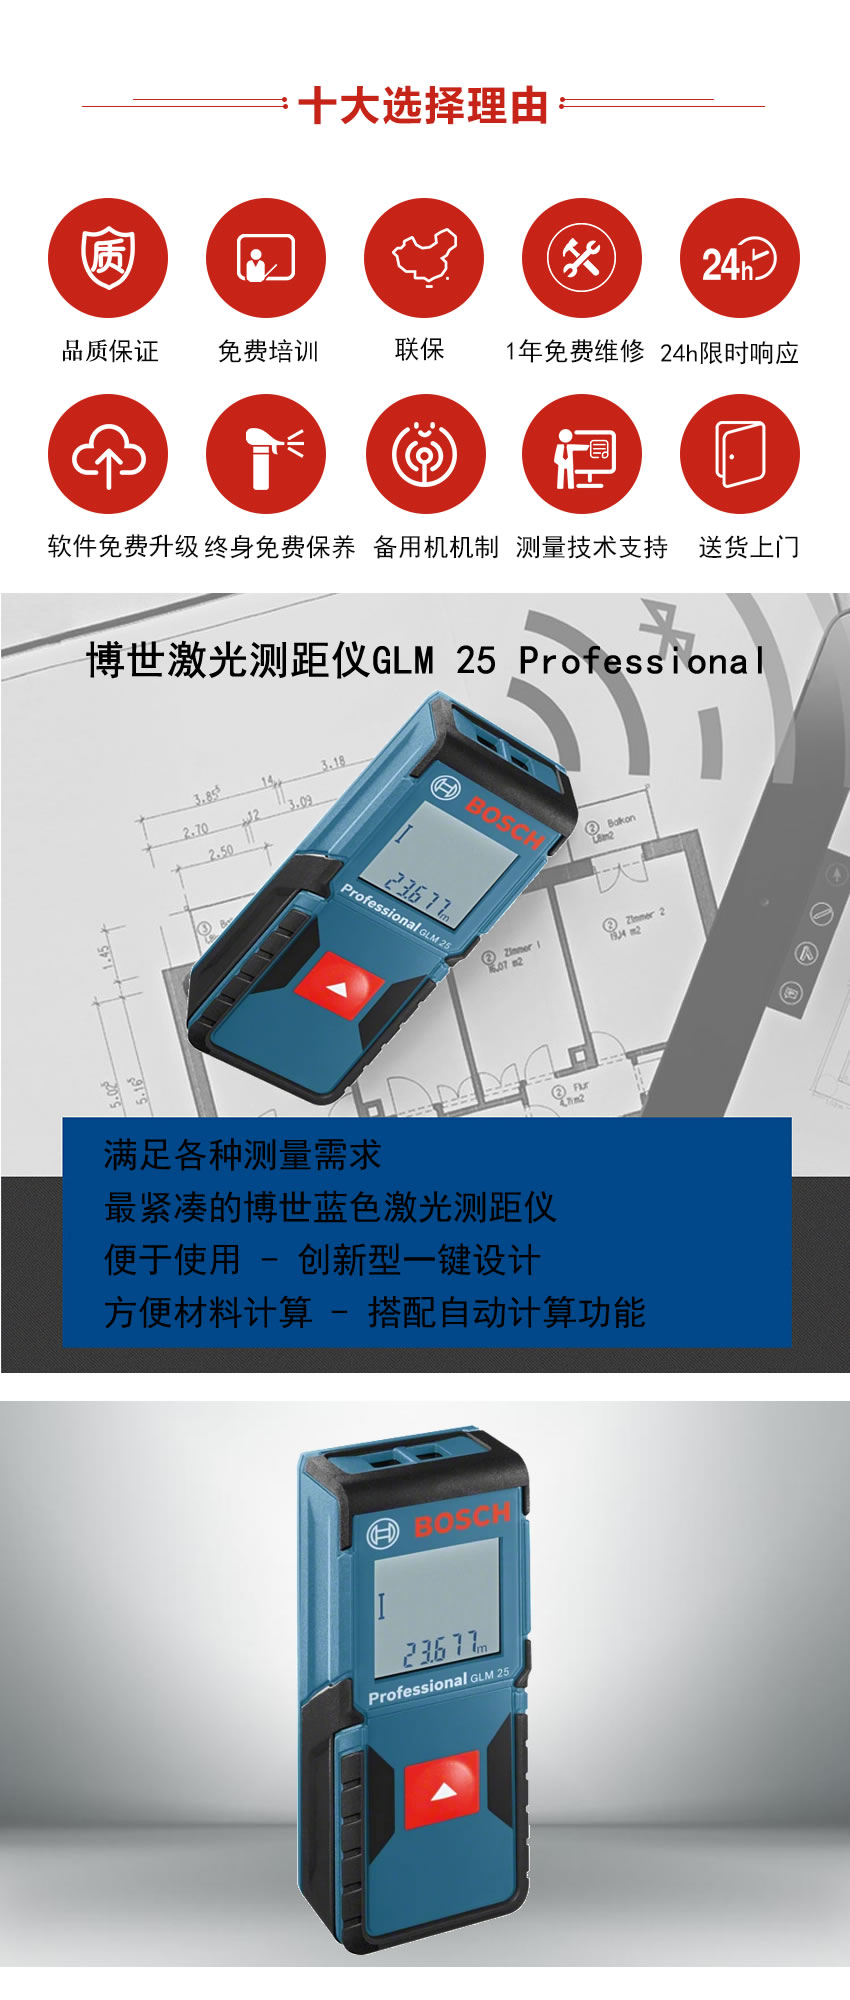 博世激光测距仪GLM 25 Professional.jpg